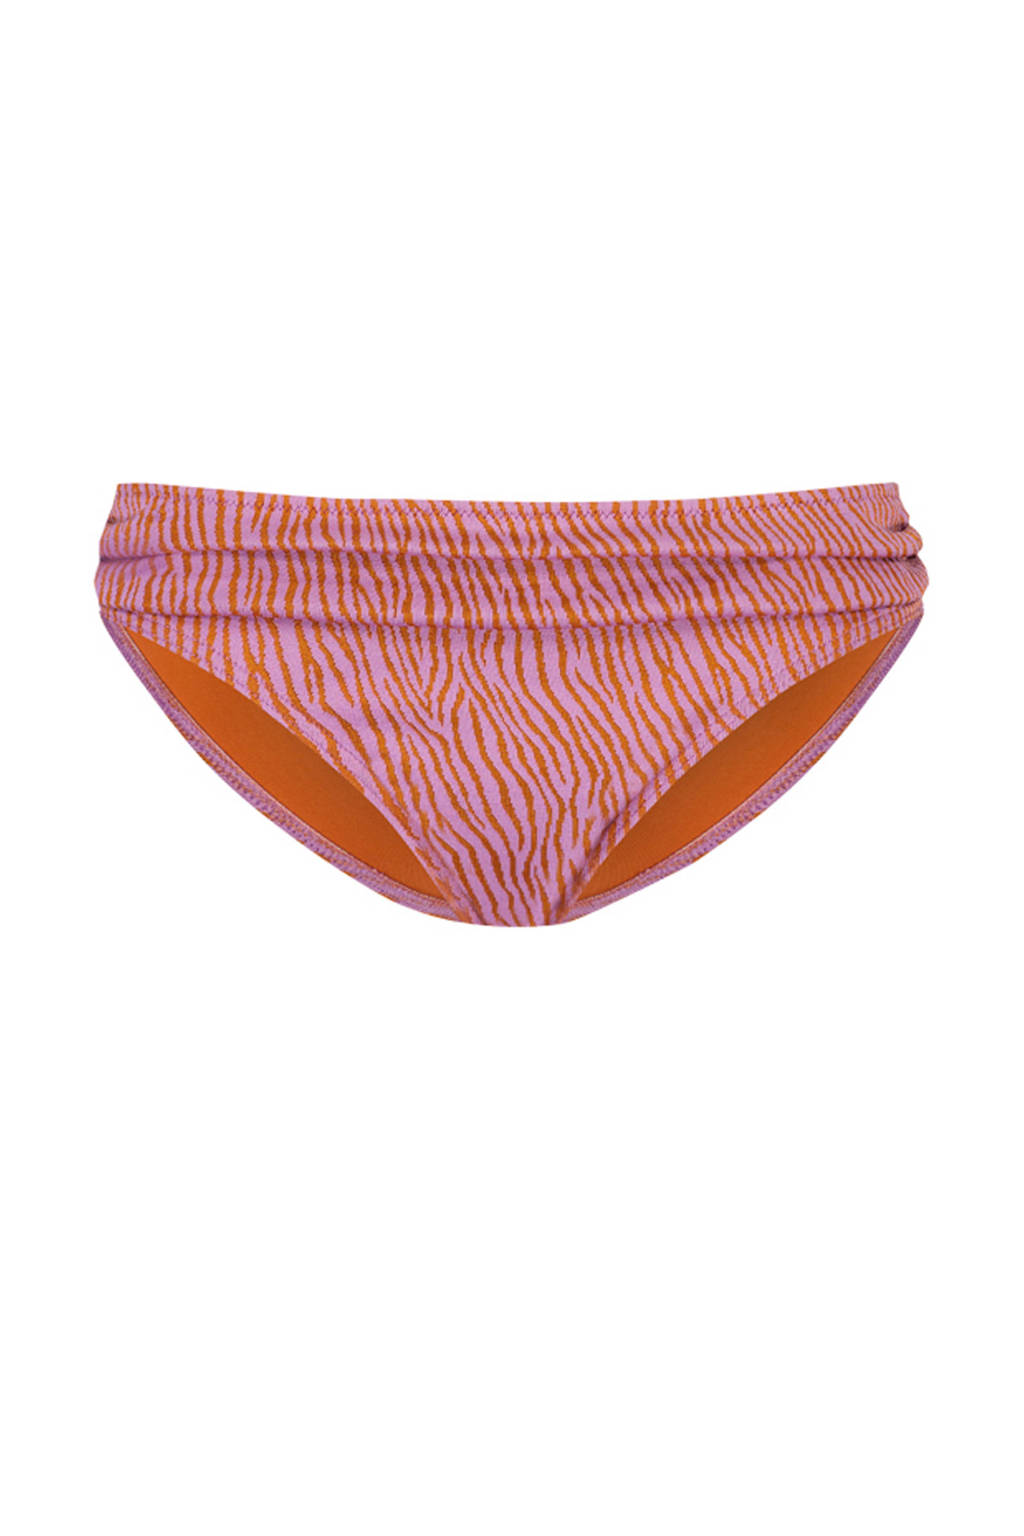 Cyell bikinibroekje Zumba Zebra roze/oranje